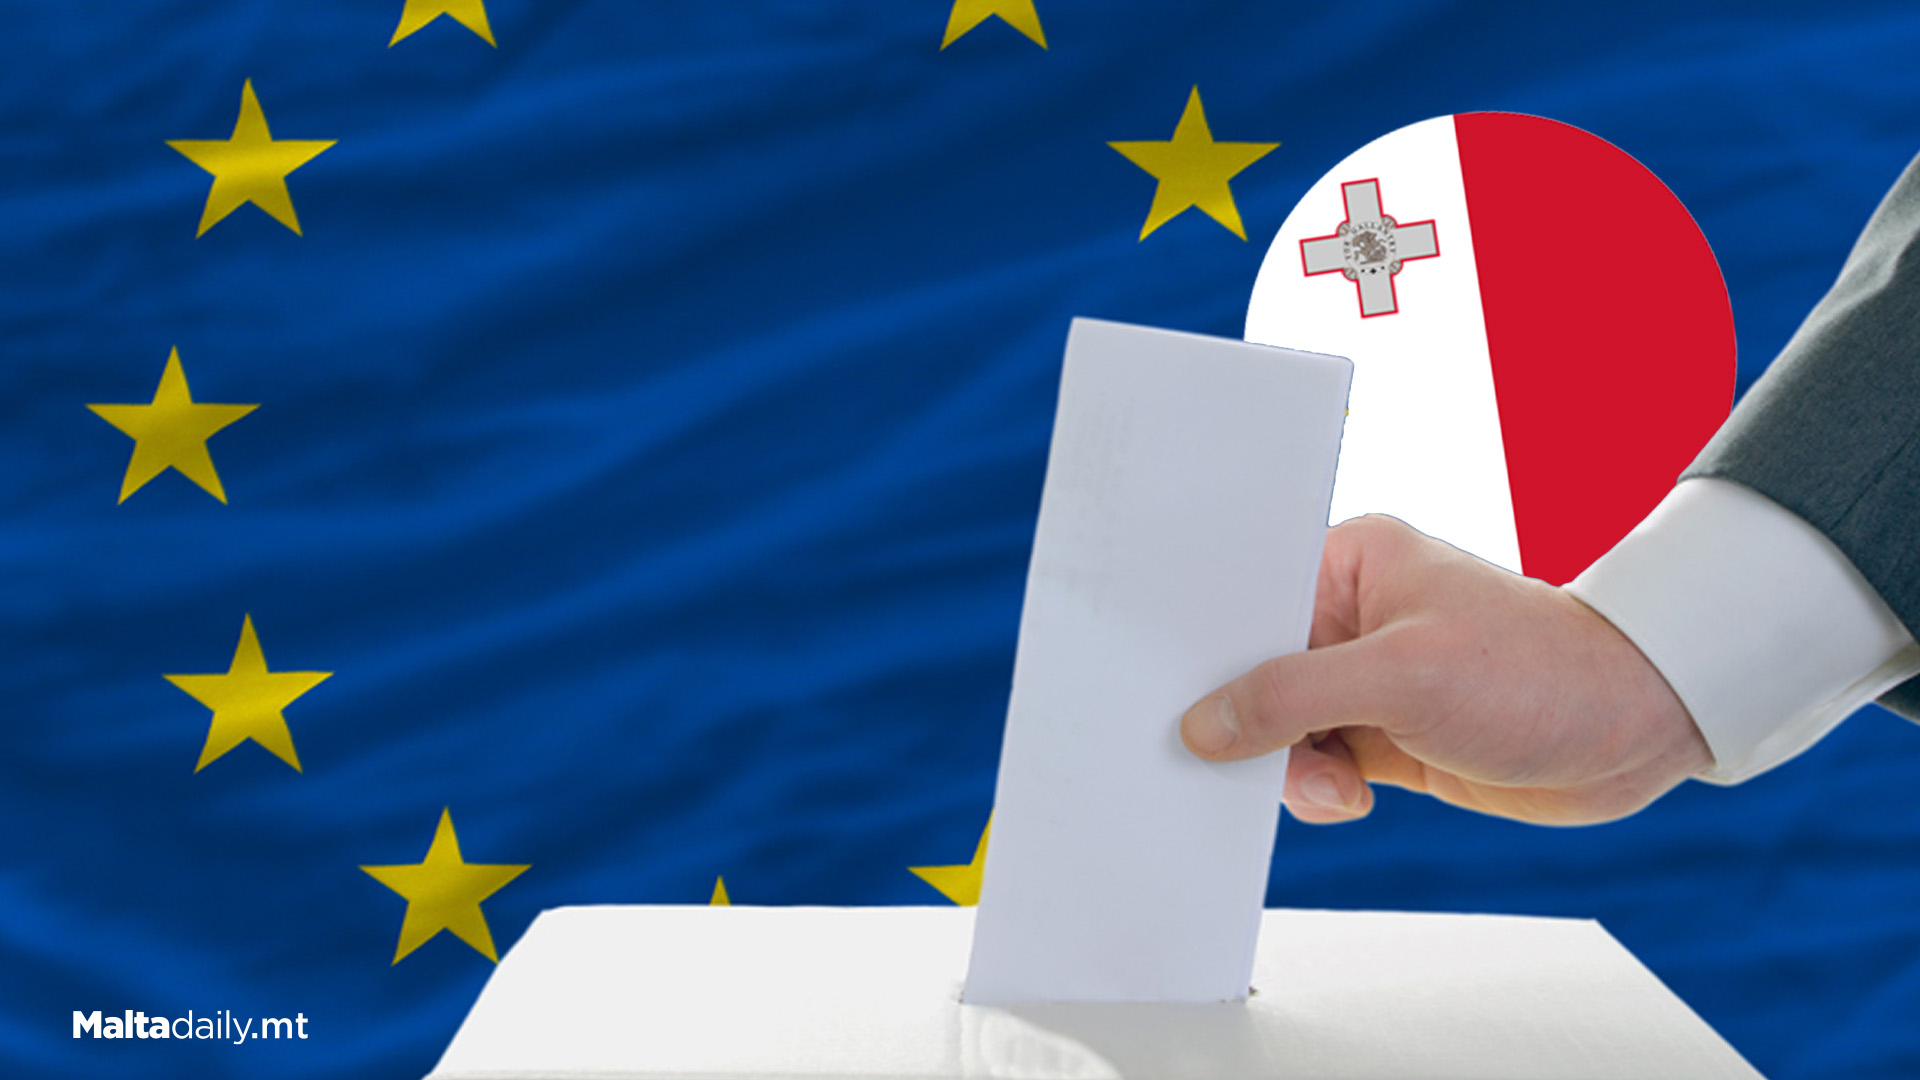 72% Of Maltese Would Vote In EU Elections If Held Next Week